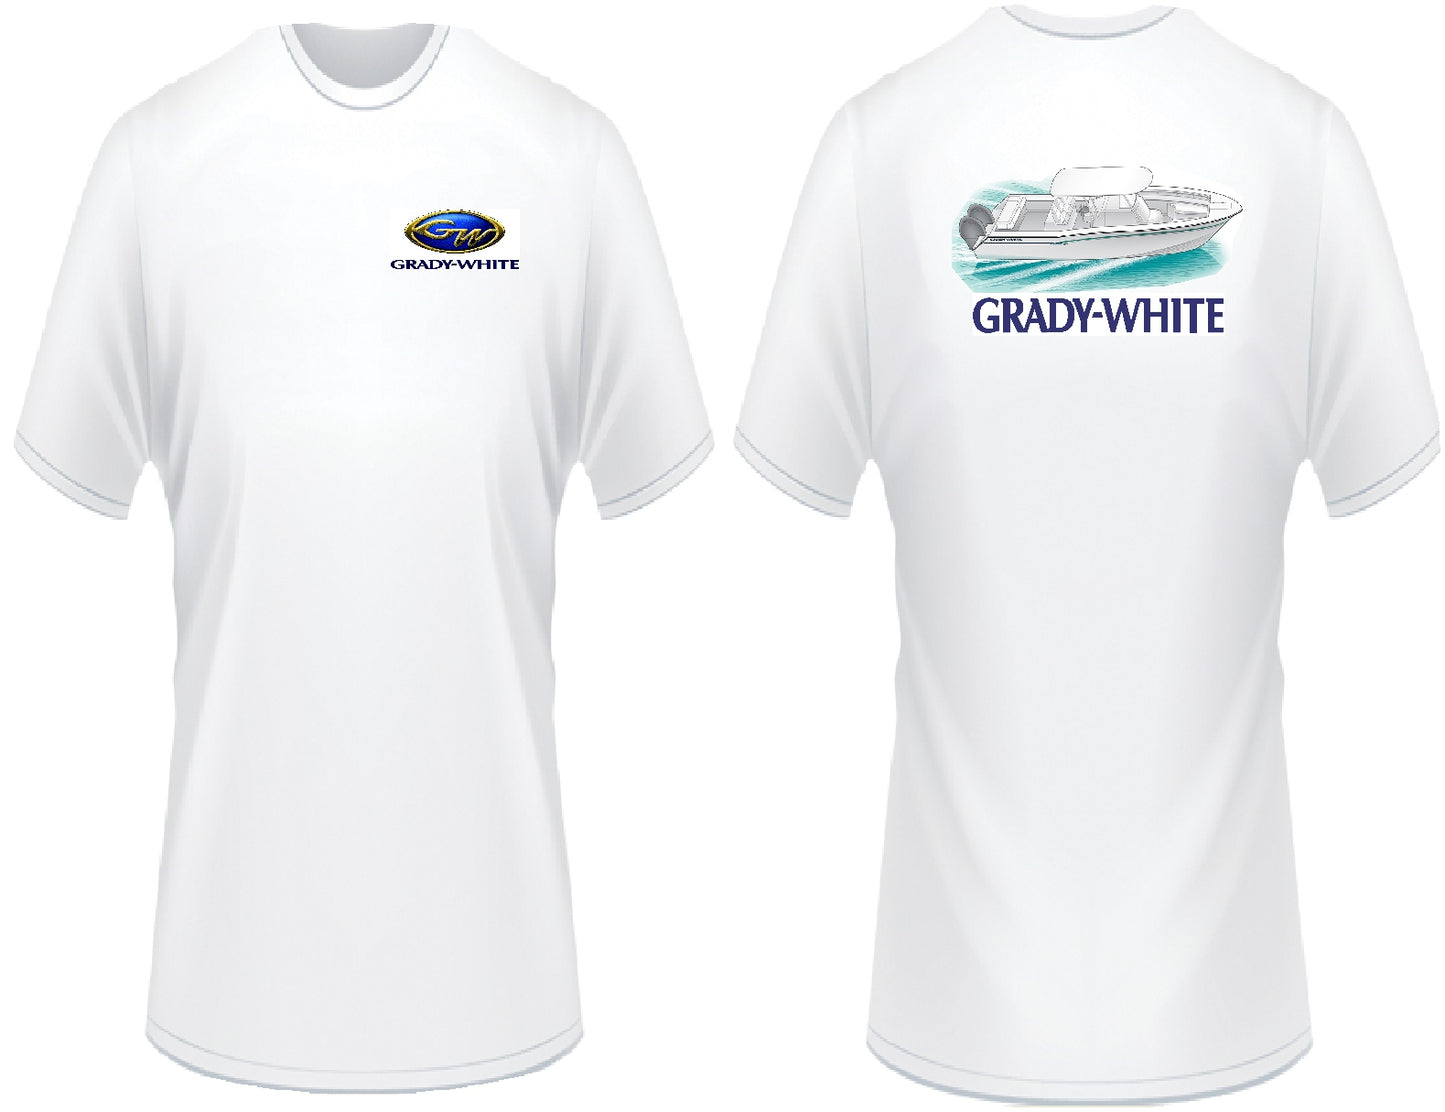 Grady White Boat T-Shirt